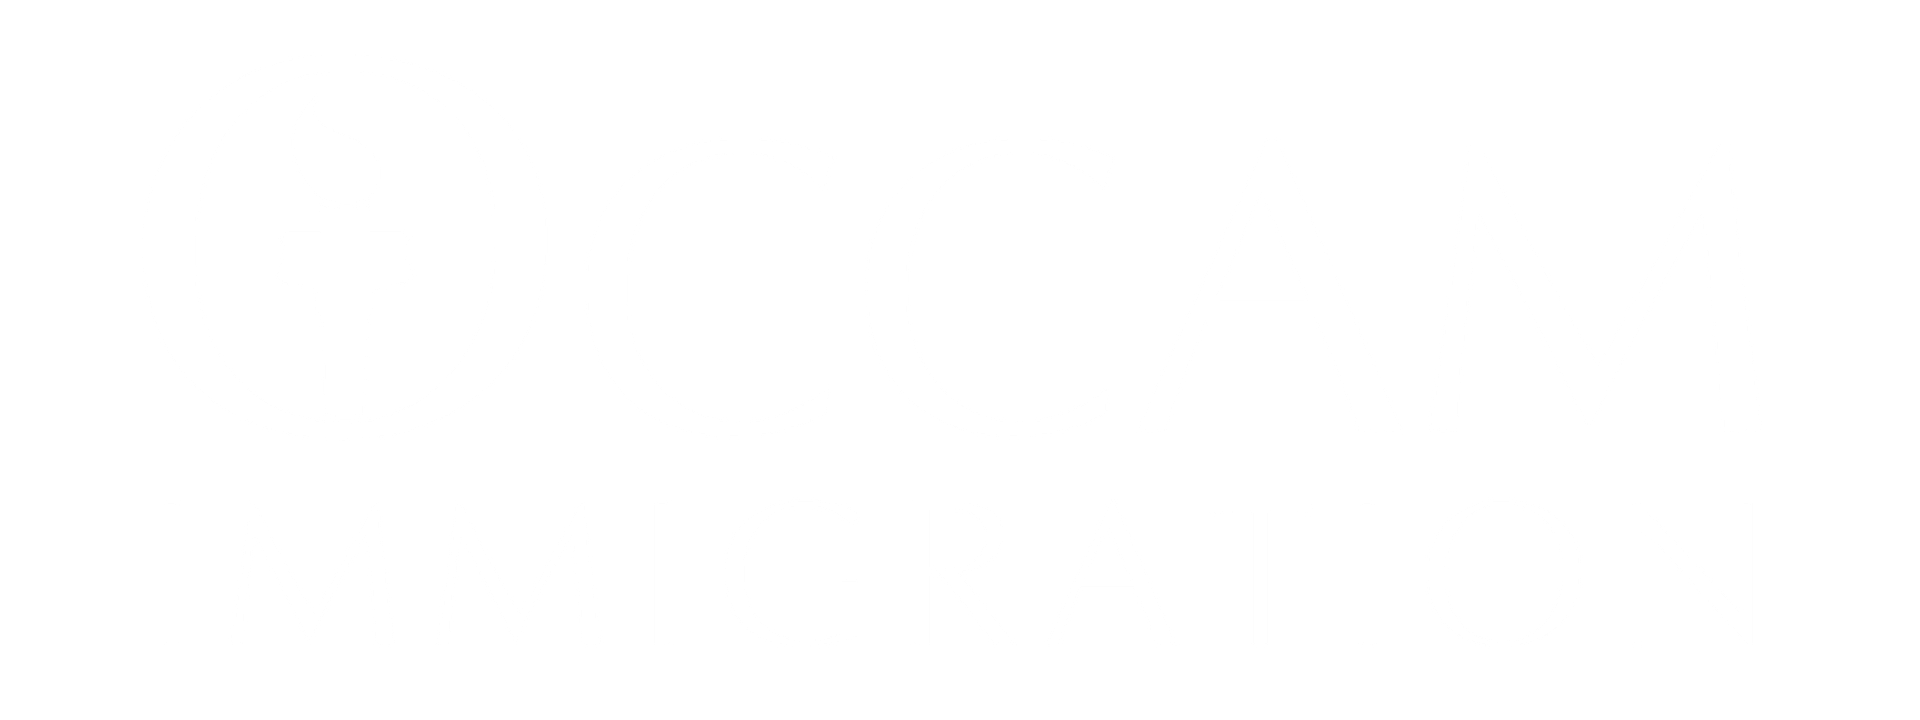 Occam Immigration Logo Wt